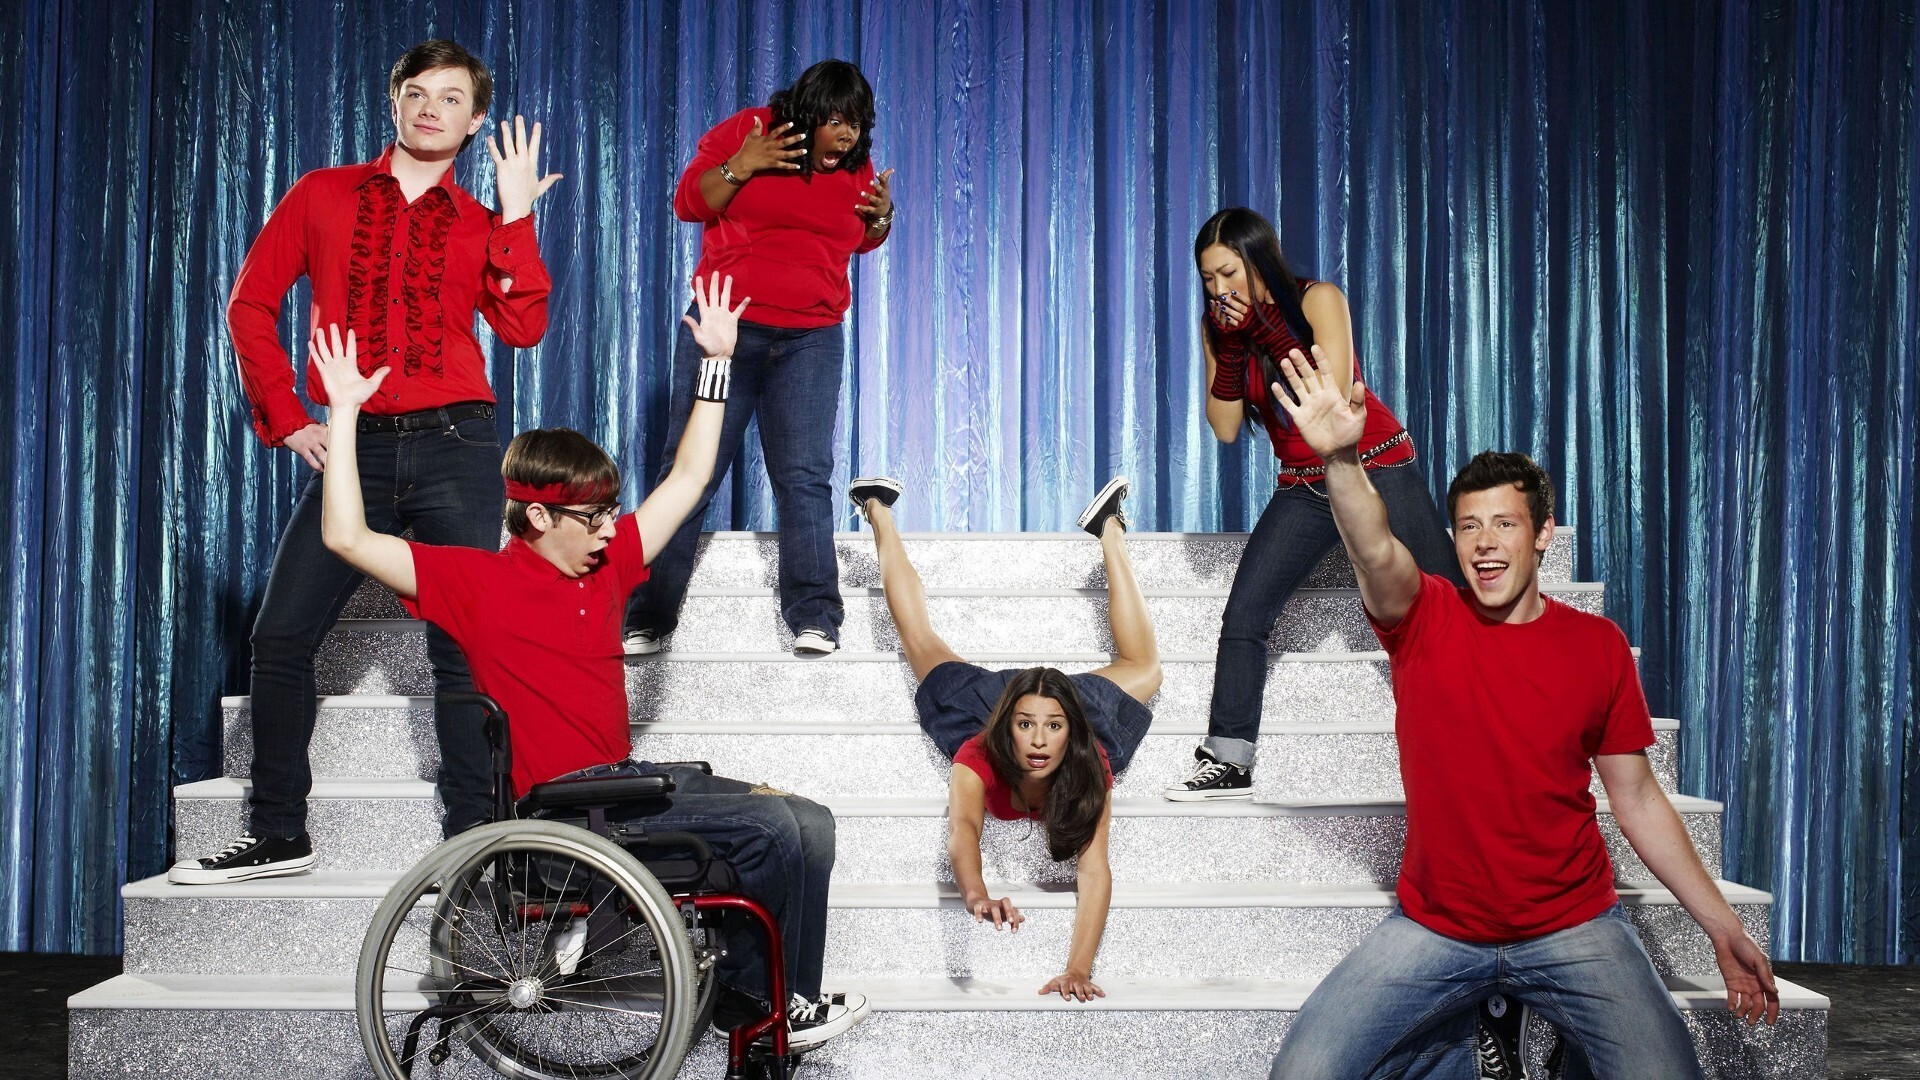 Glee (TV series): The 2011 Golden Globe Award for Best Supporting Actor for Chris Colfer. 1920x1080 Full HD Wallpaper.